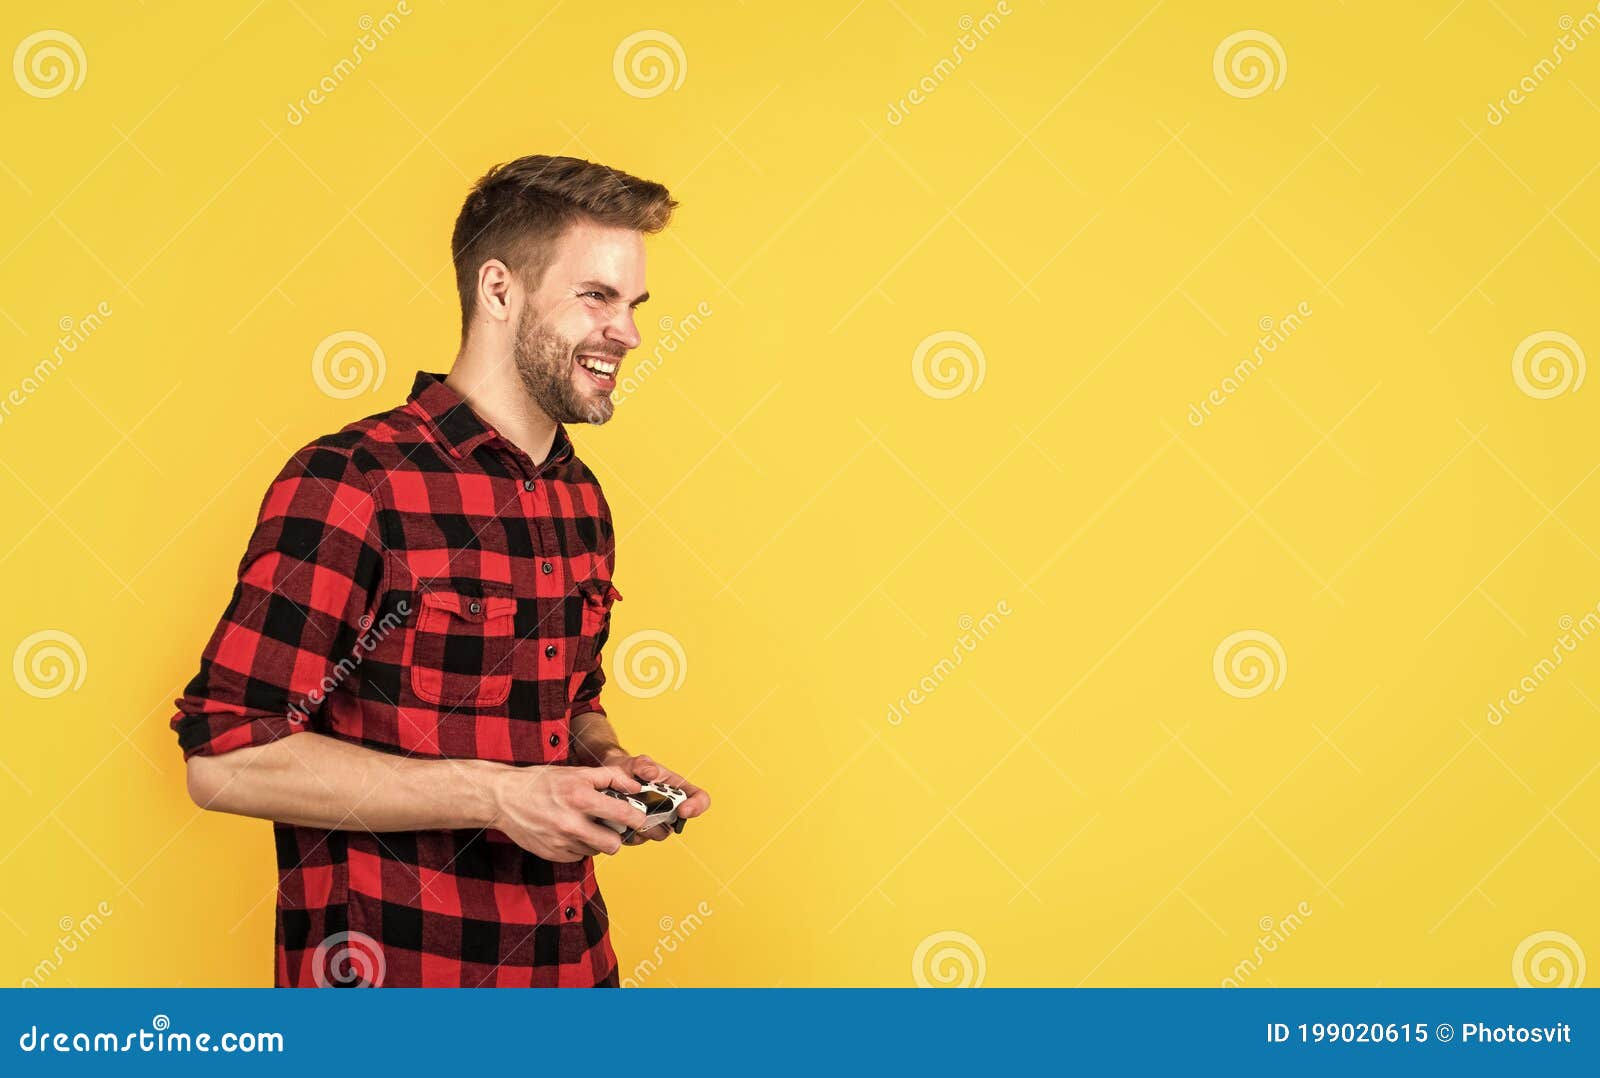 Man Play Video Games. Console Controller Joystick